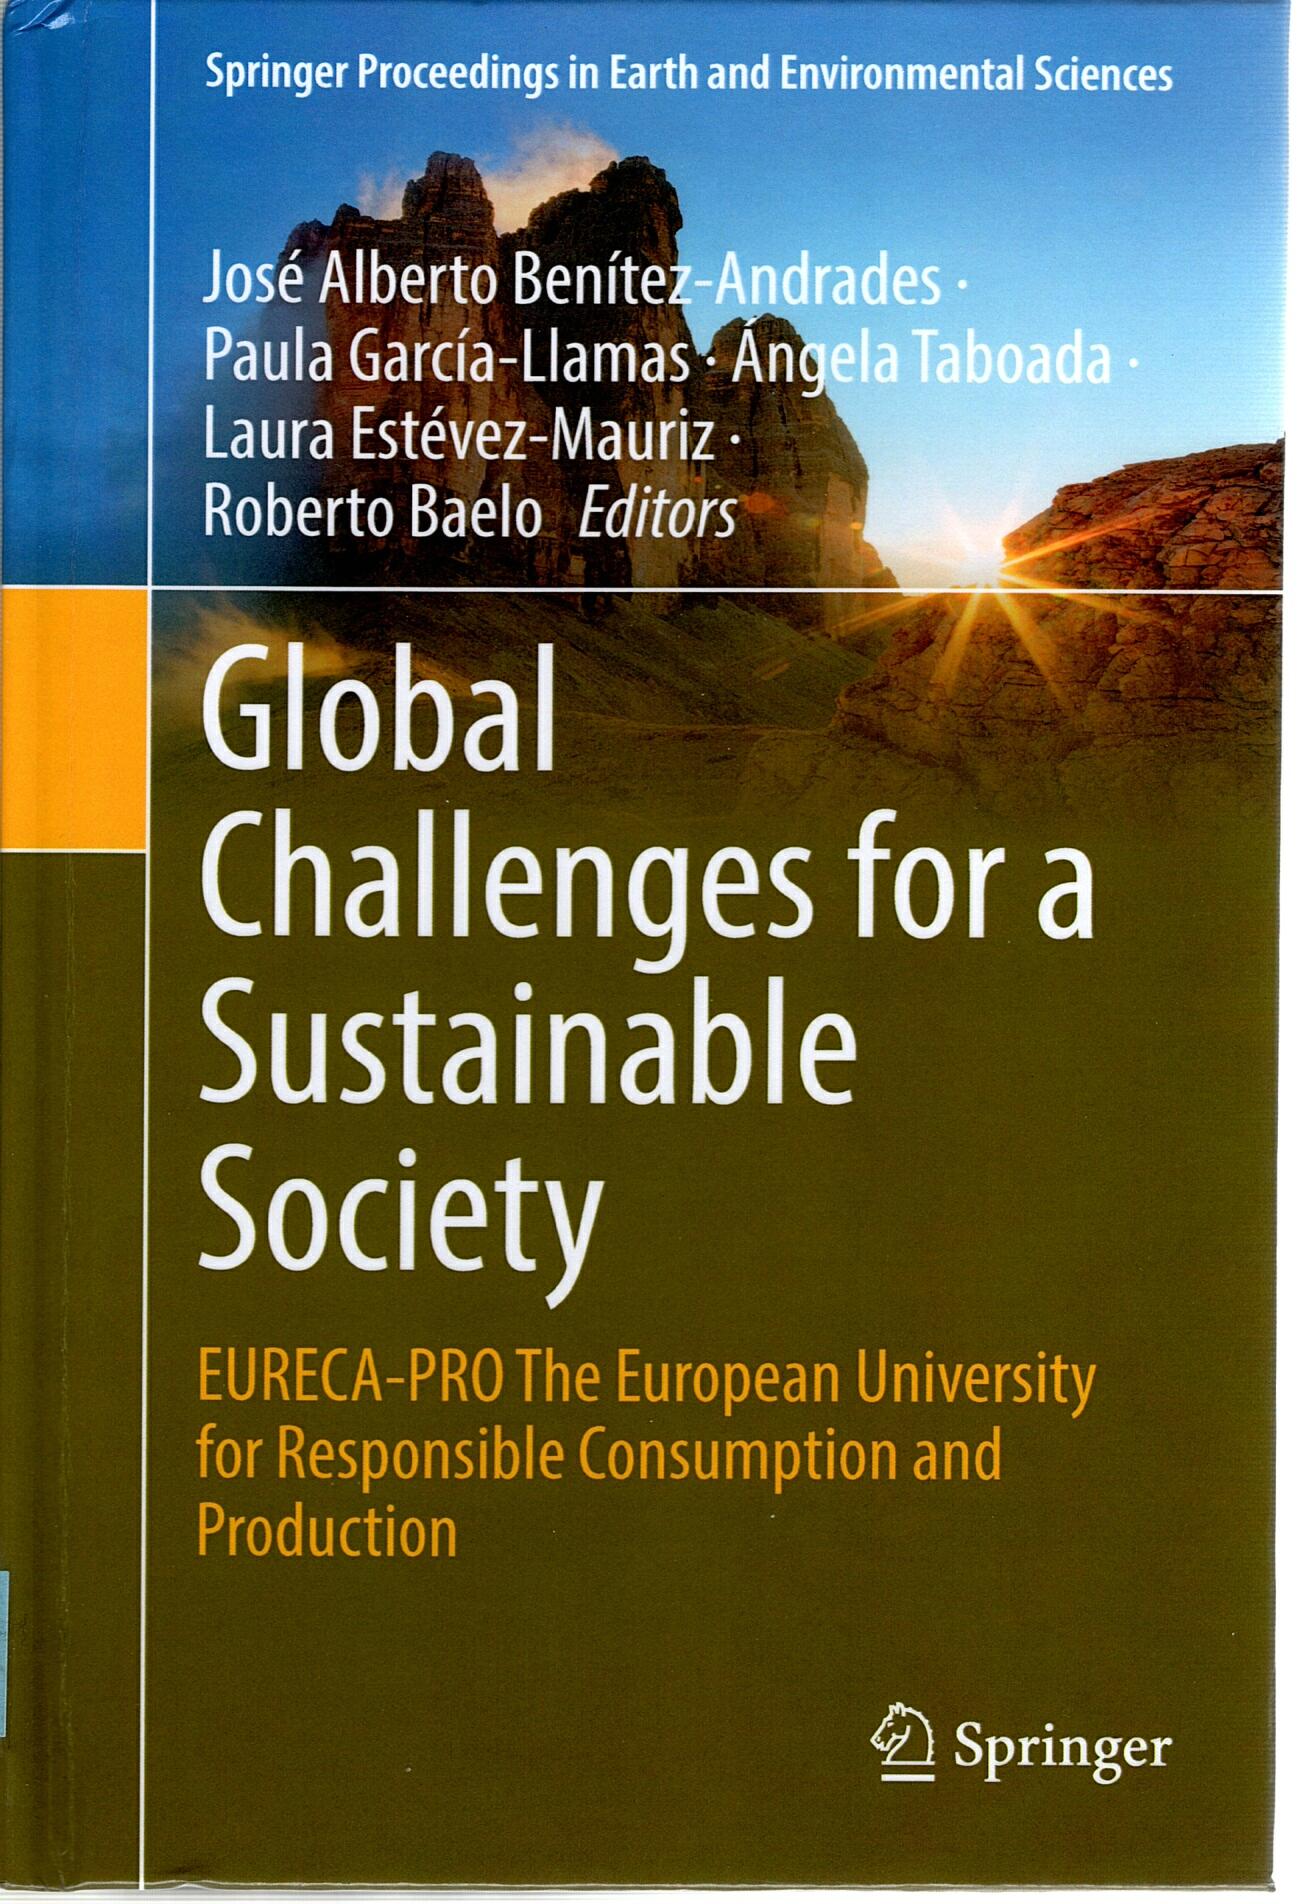 Imagen de portada del libro Global Challenges for a Sustainable Society